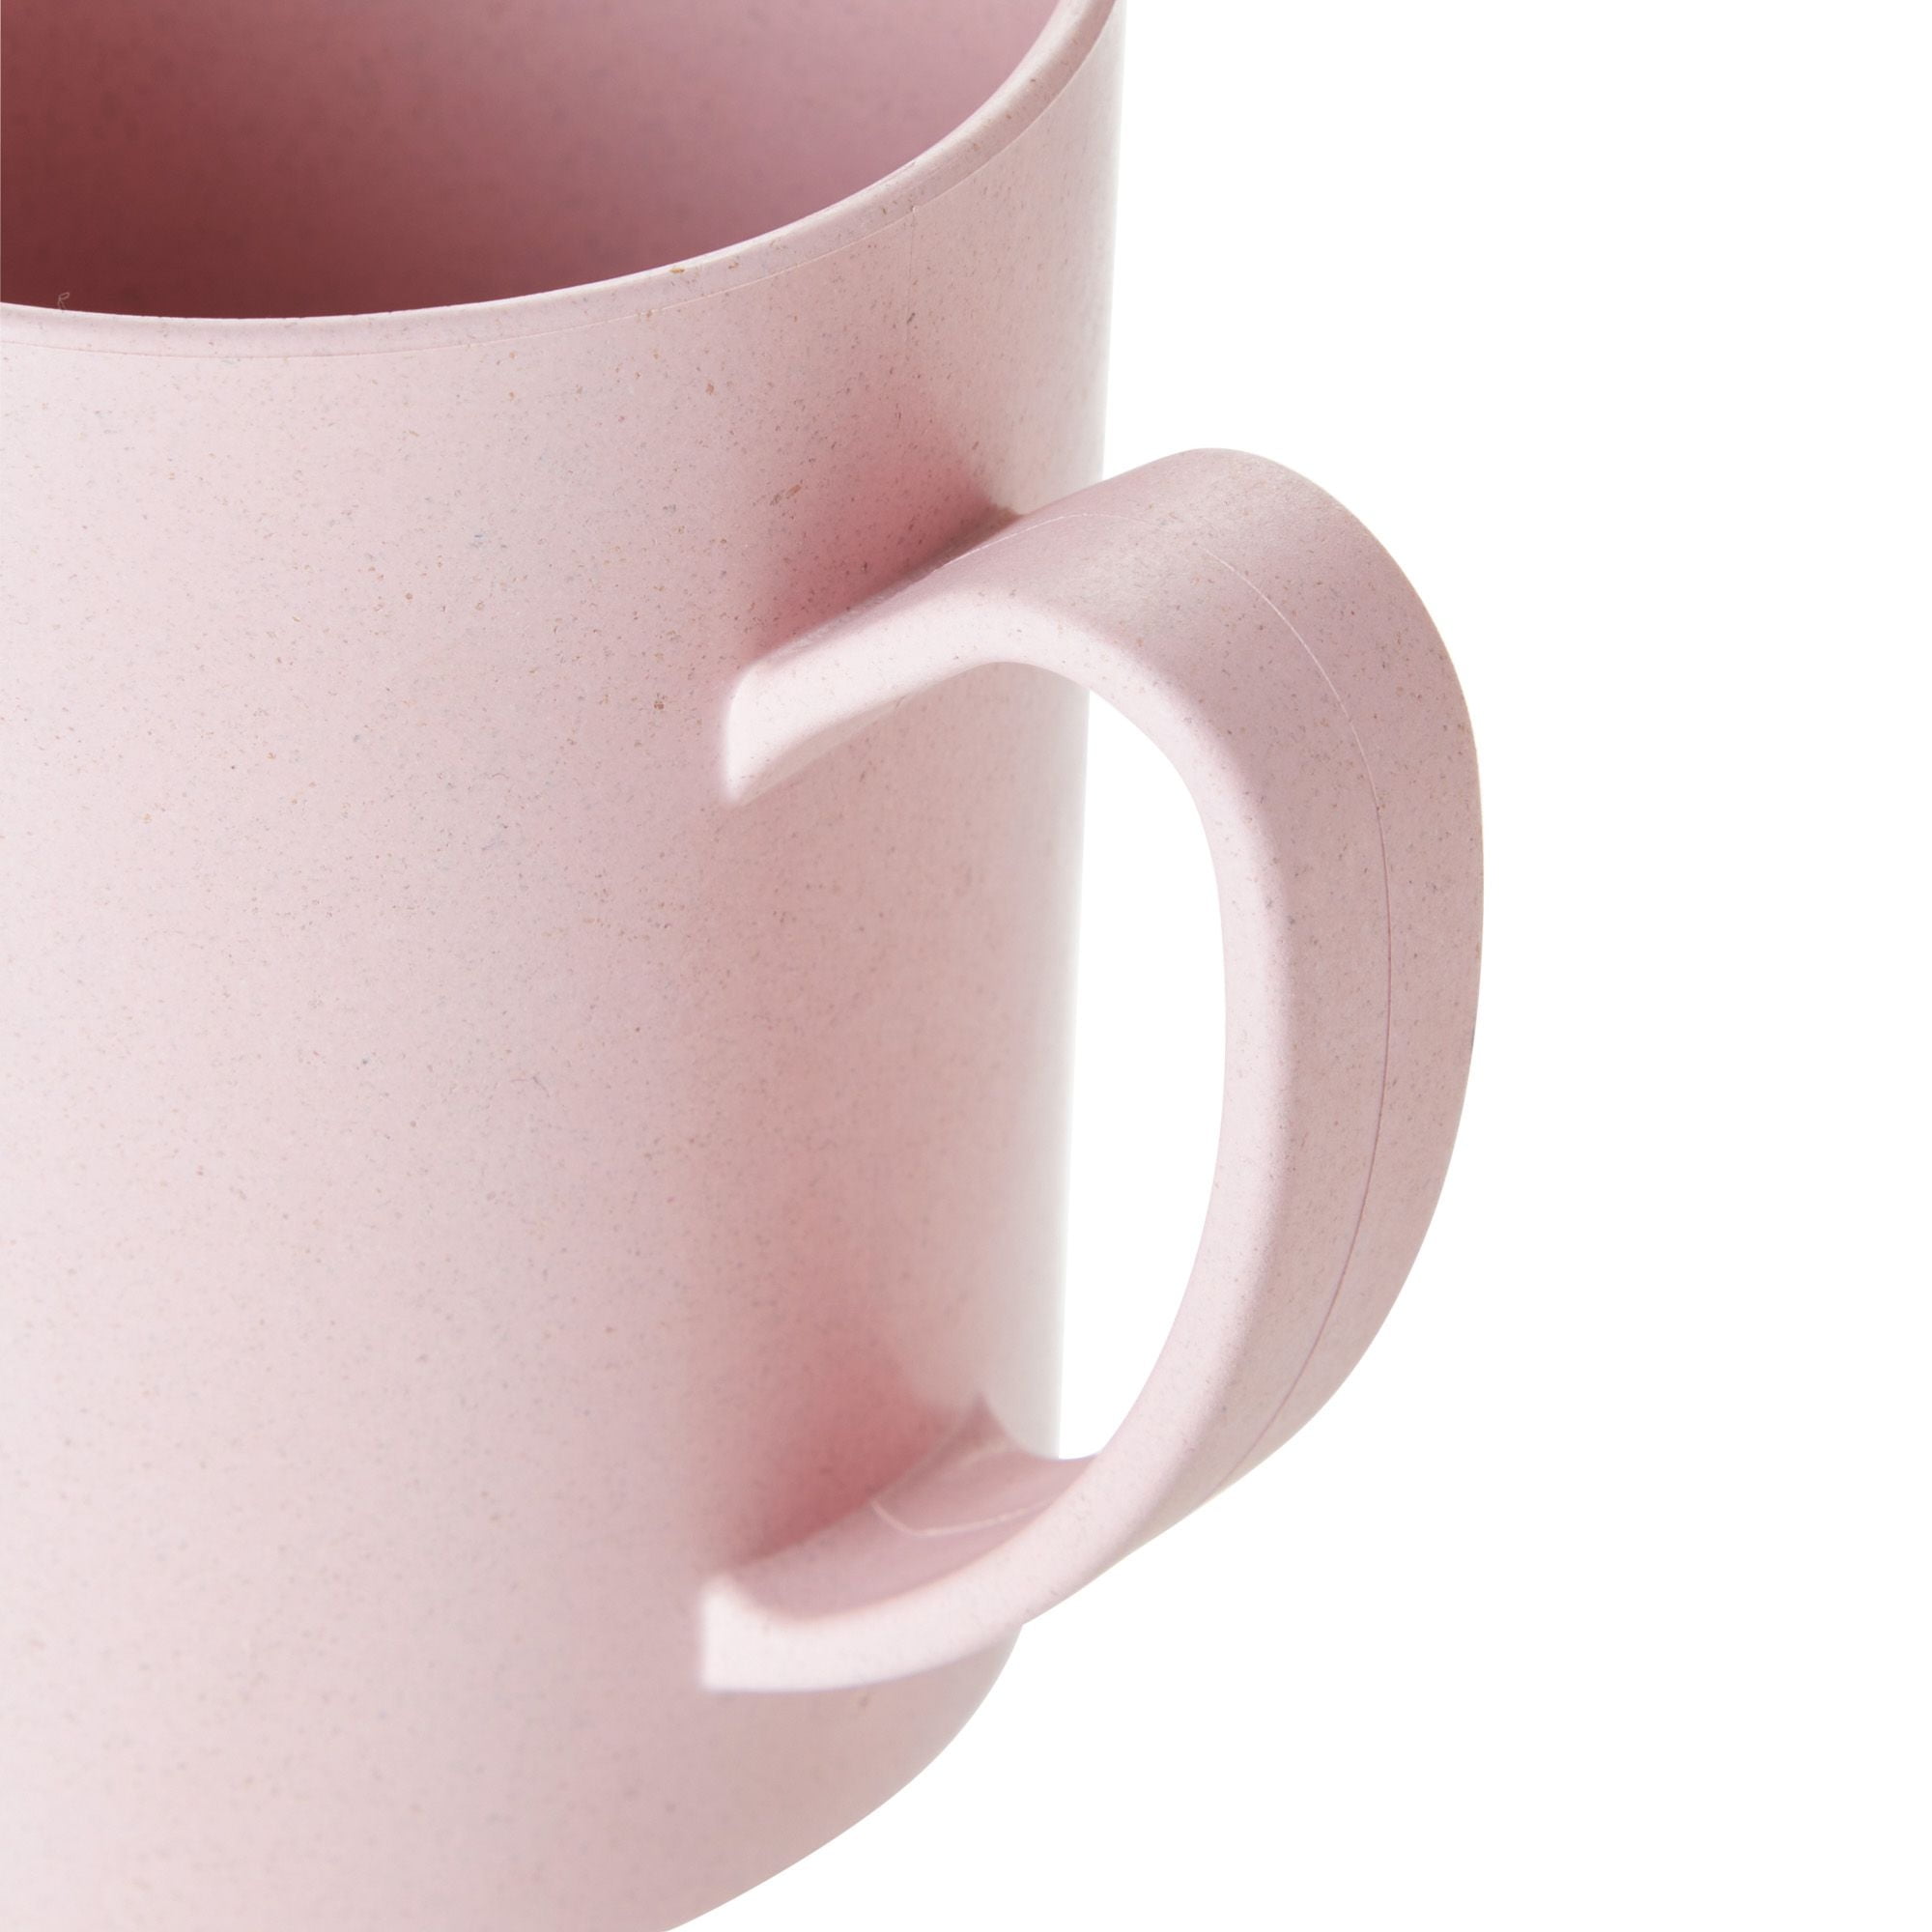 450ML Coffee Cups With Lids Wheat Straw Reusable Portable Coffee Cup  Dishwasher Safe Coffee Mug Coffee Tea Travel Cups